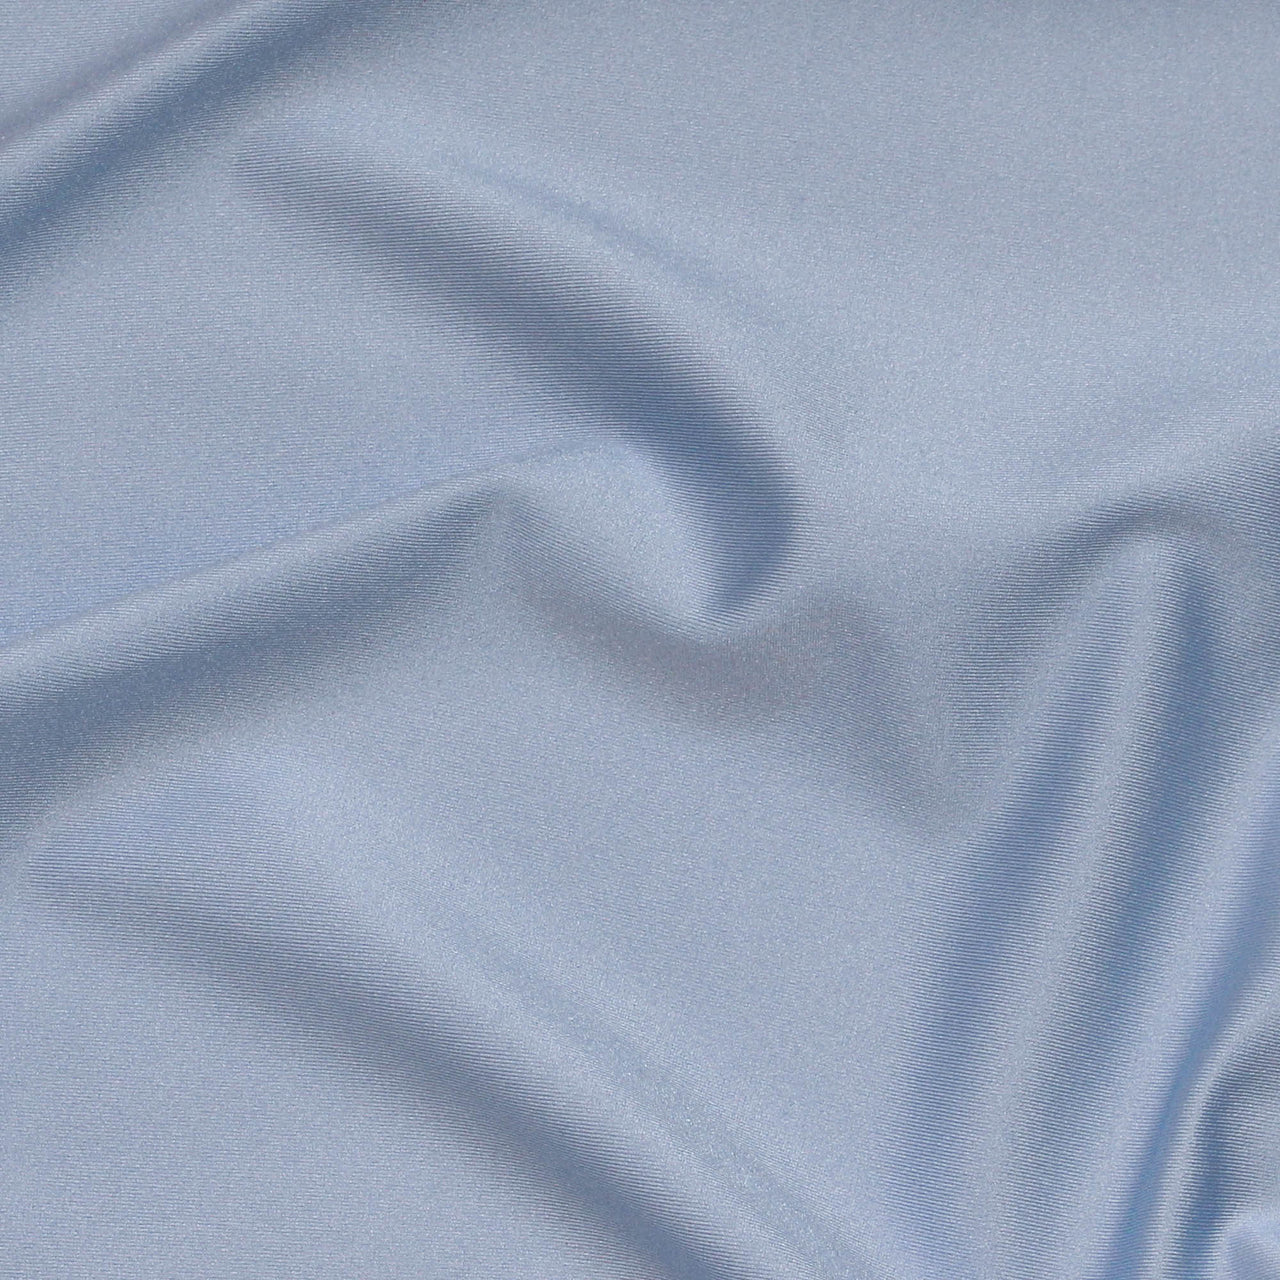 Baby Blue - Nylon Spandex Fabric - 4 Way All Way Stretch Superior Quality - Leotards, Dancewear